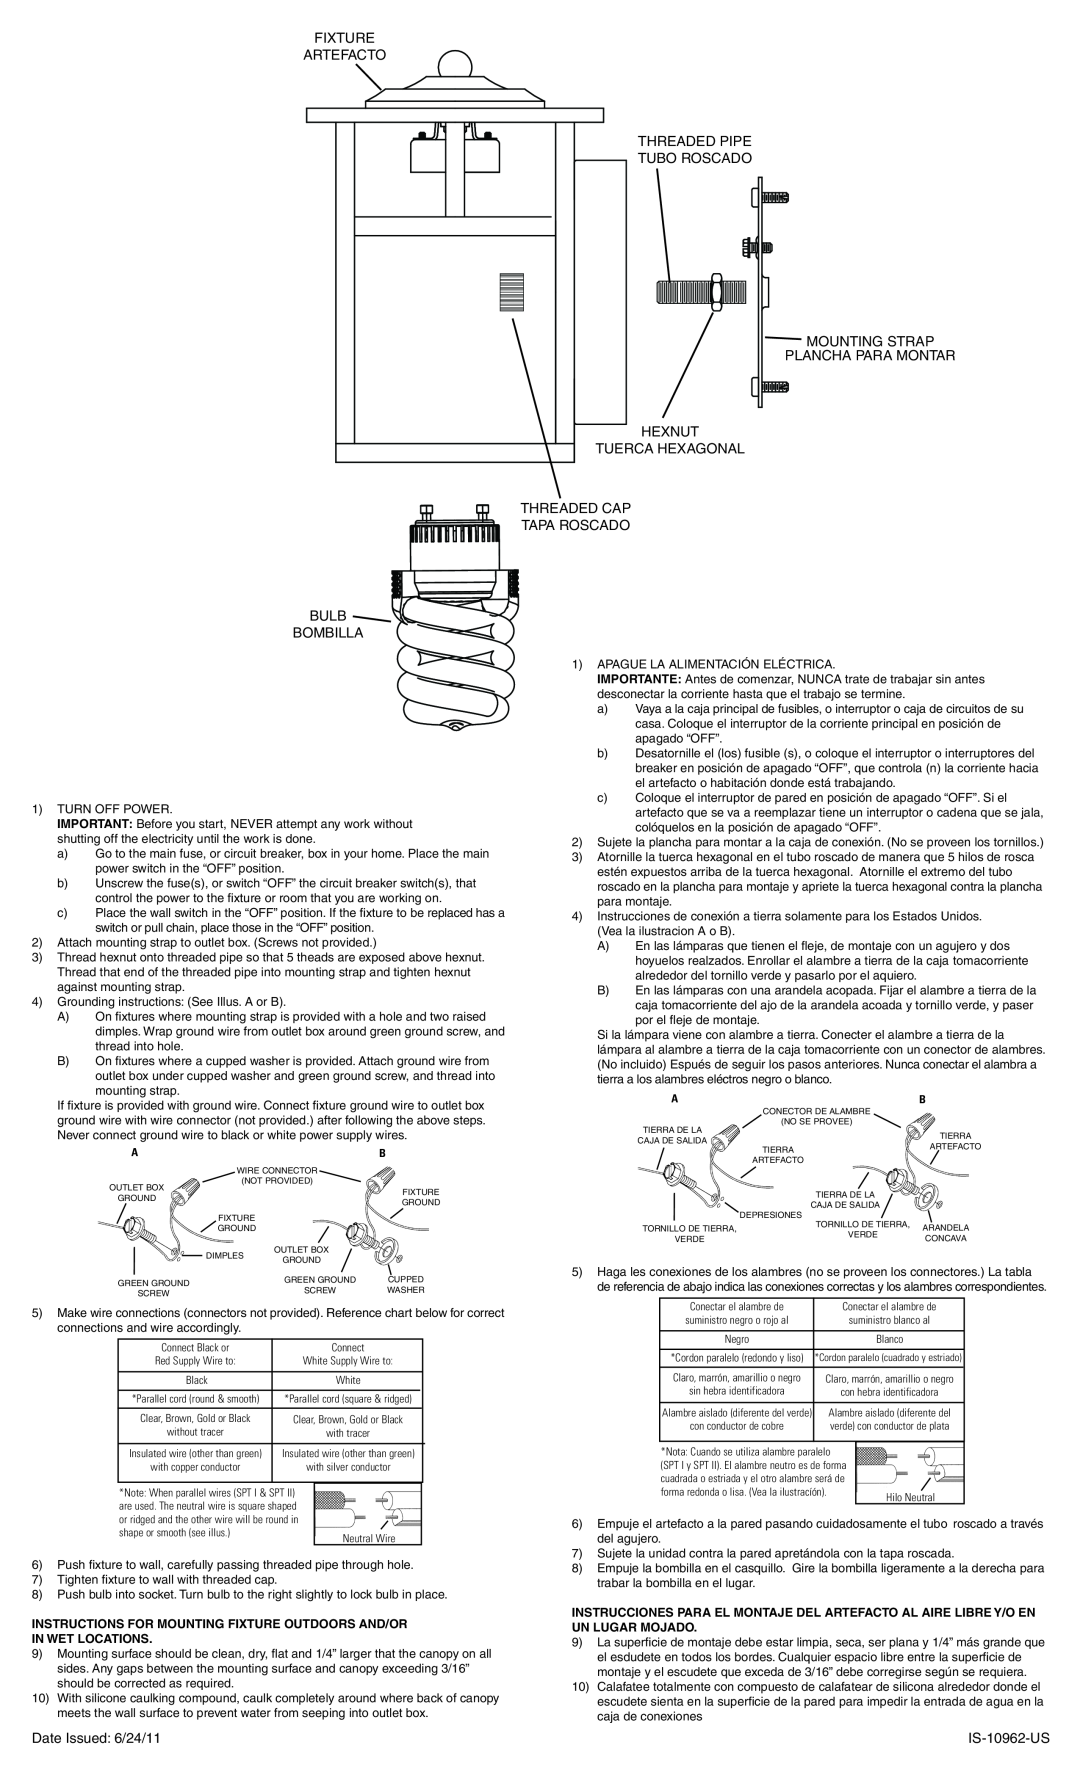 Kichler Lighting 10962CV manual Fixture, Artefacto, threaded pipe tubo roscado hexnut tuerca hexagonal, Bulb bombilla 